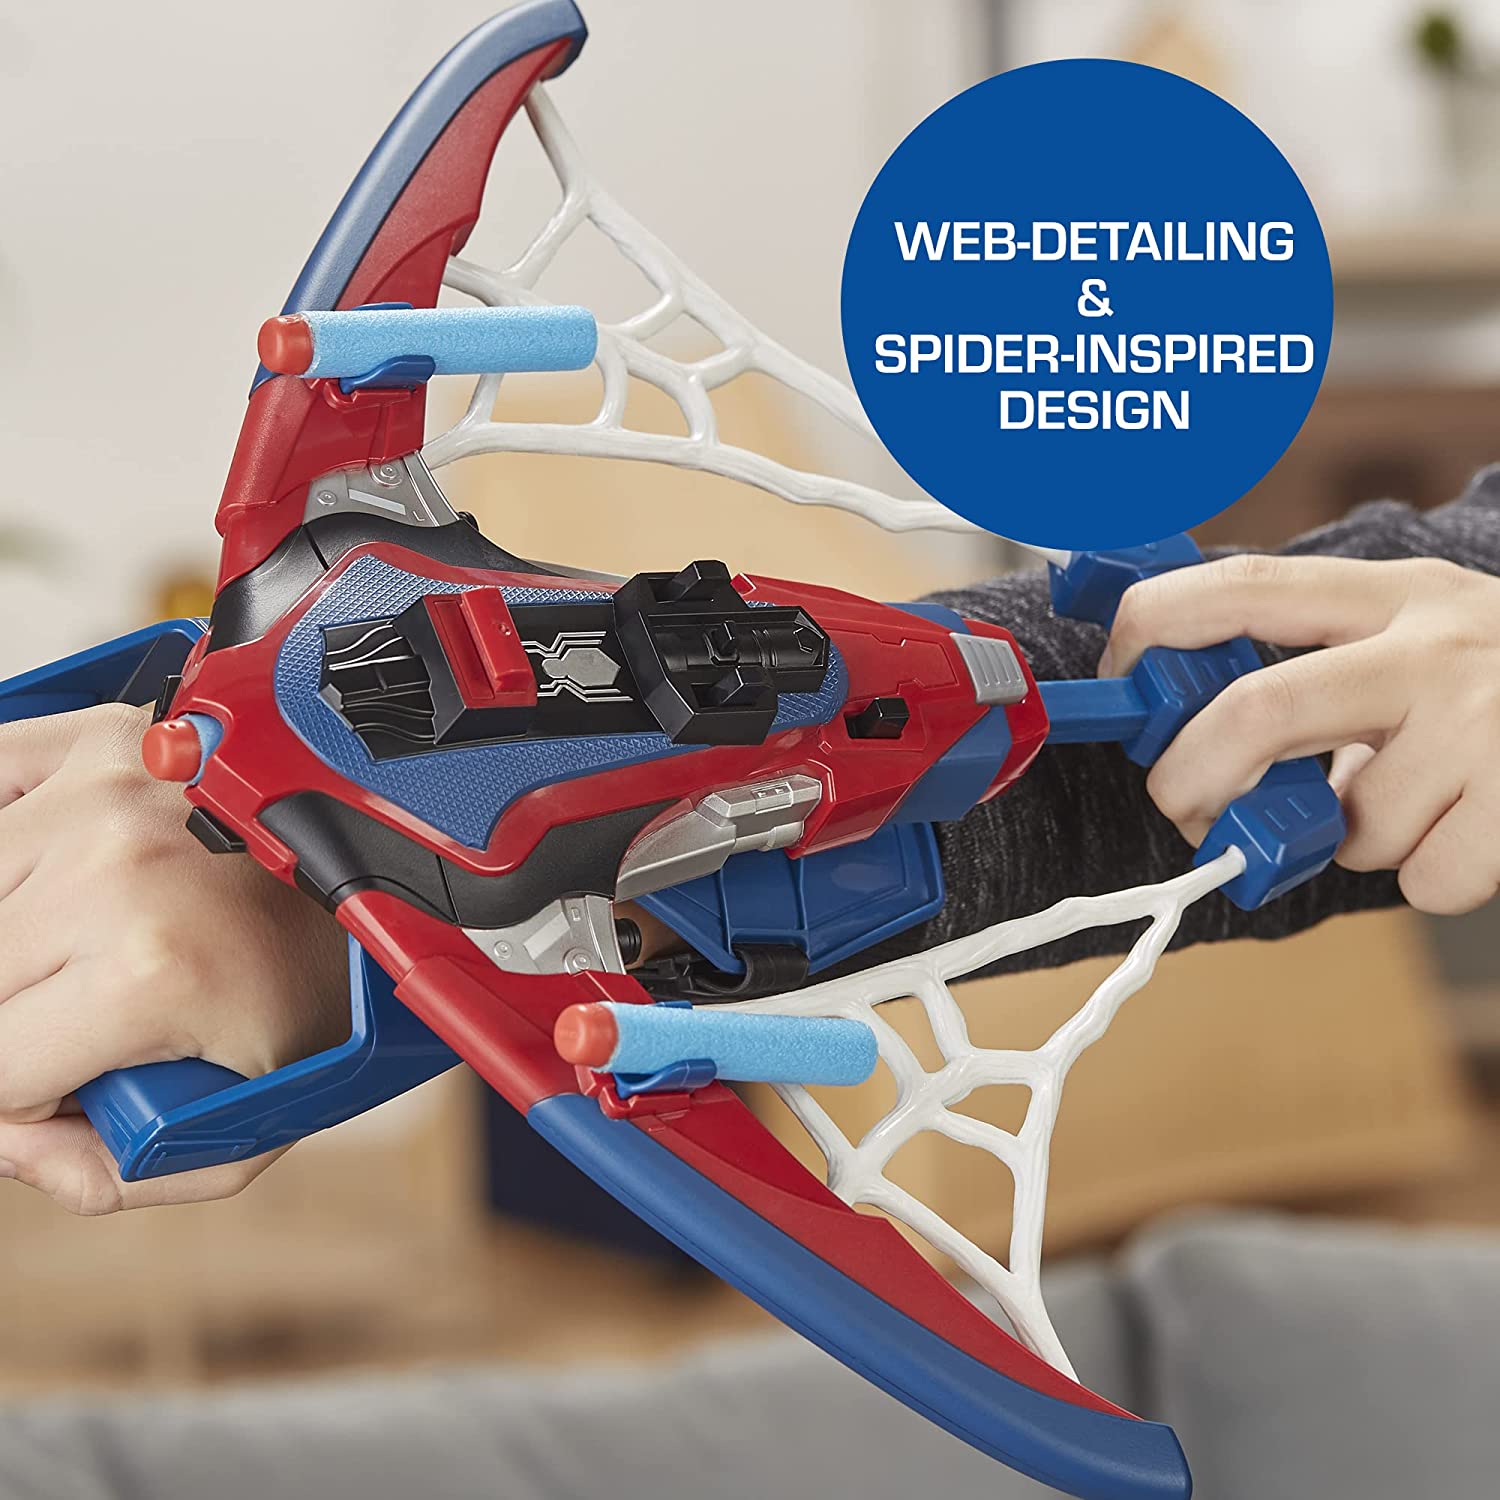 Spider-Man Web Shots Spiderbolt NERF Powered Blaster Toy - image 4 of 14